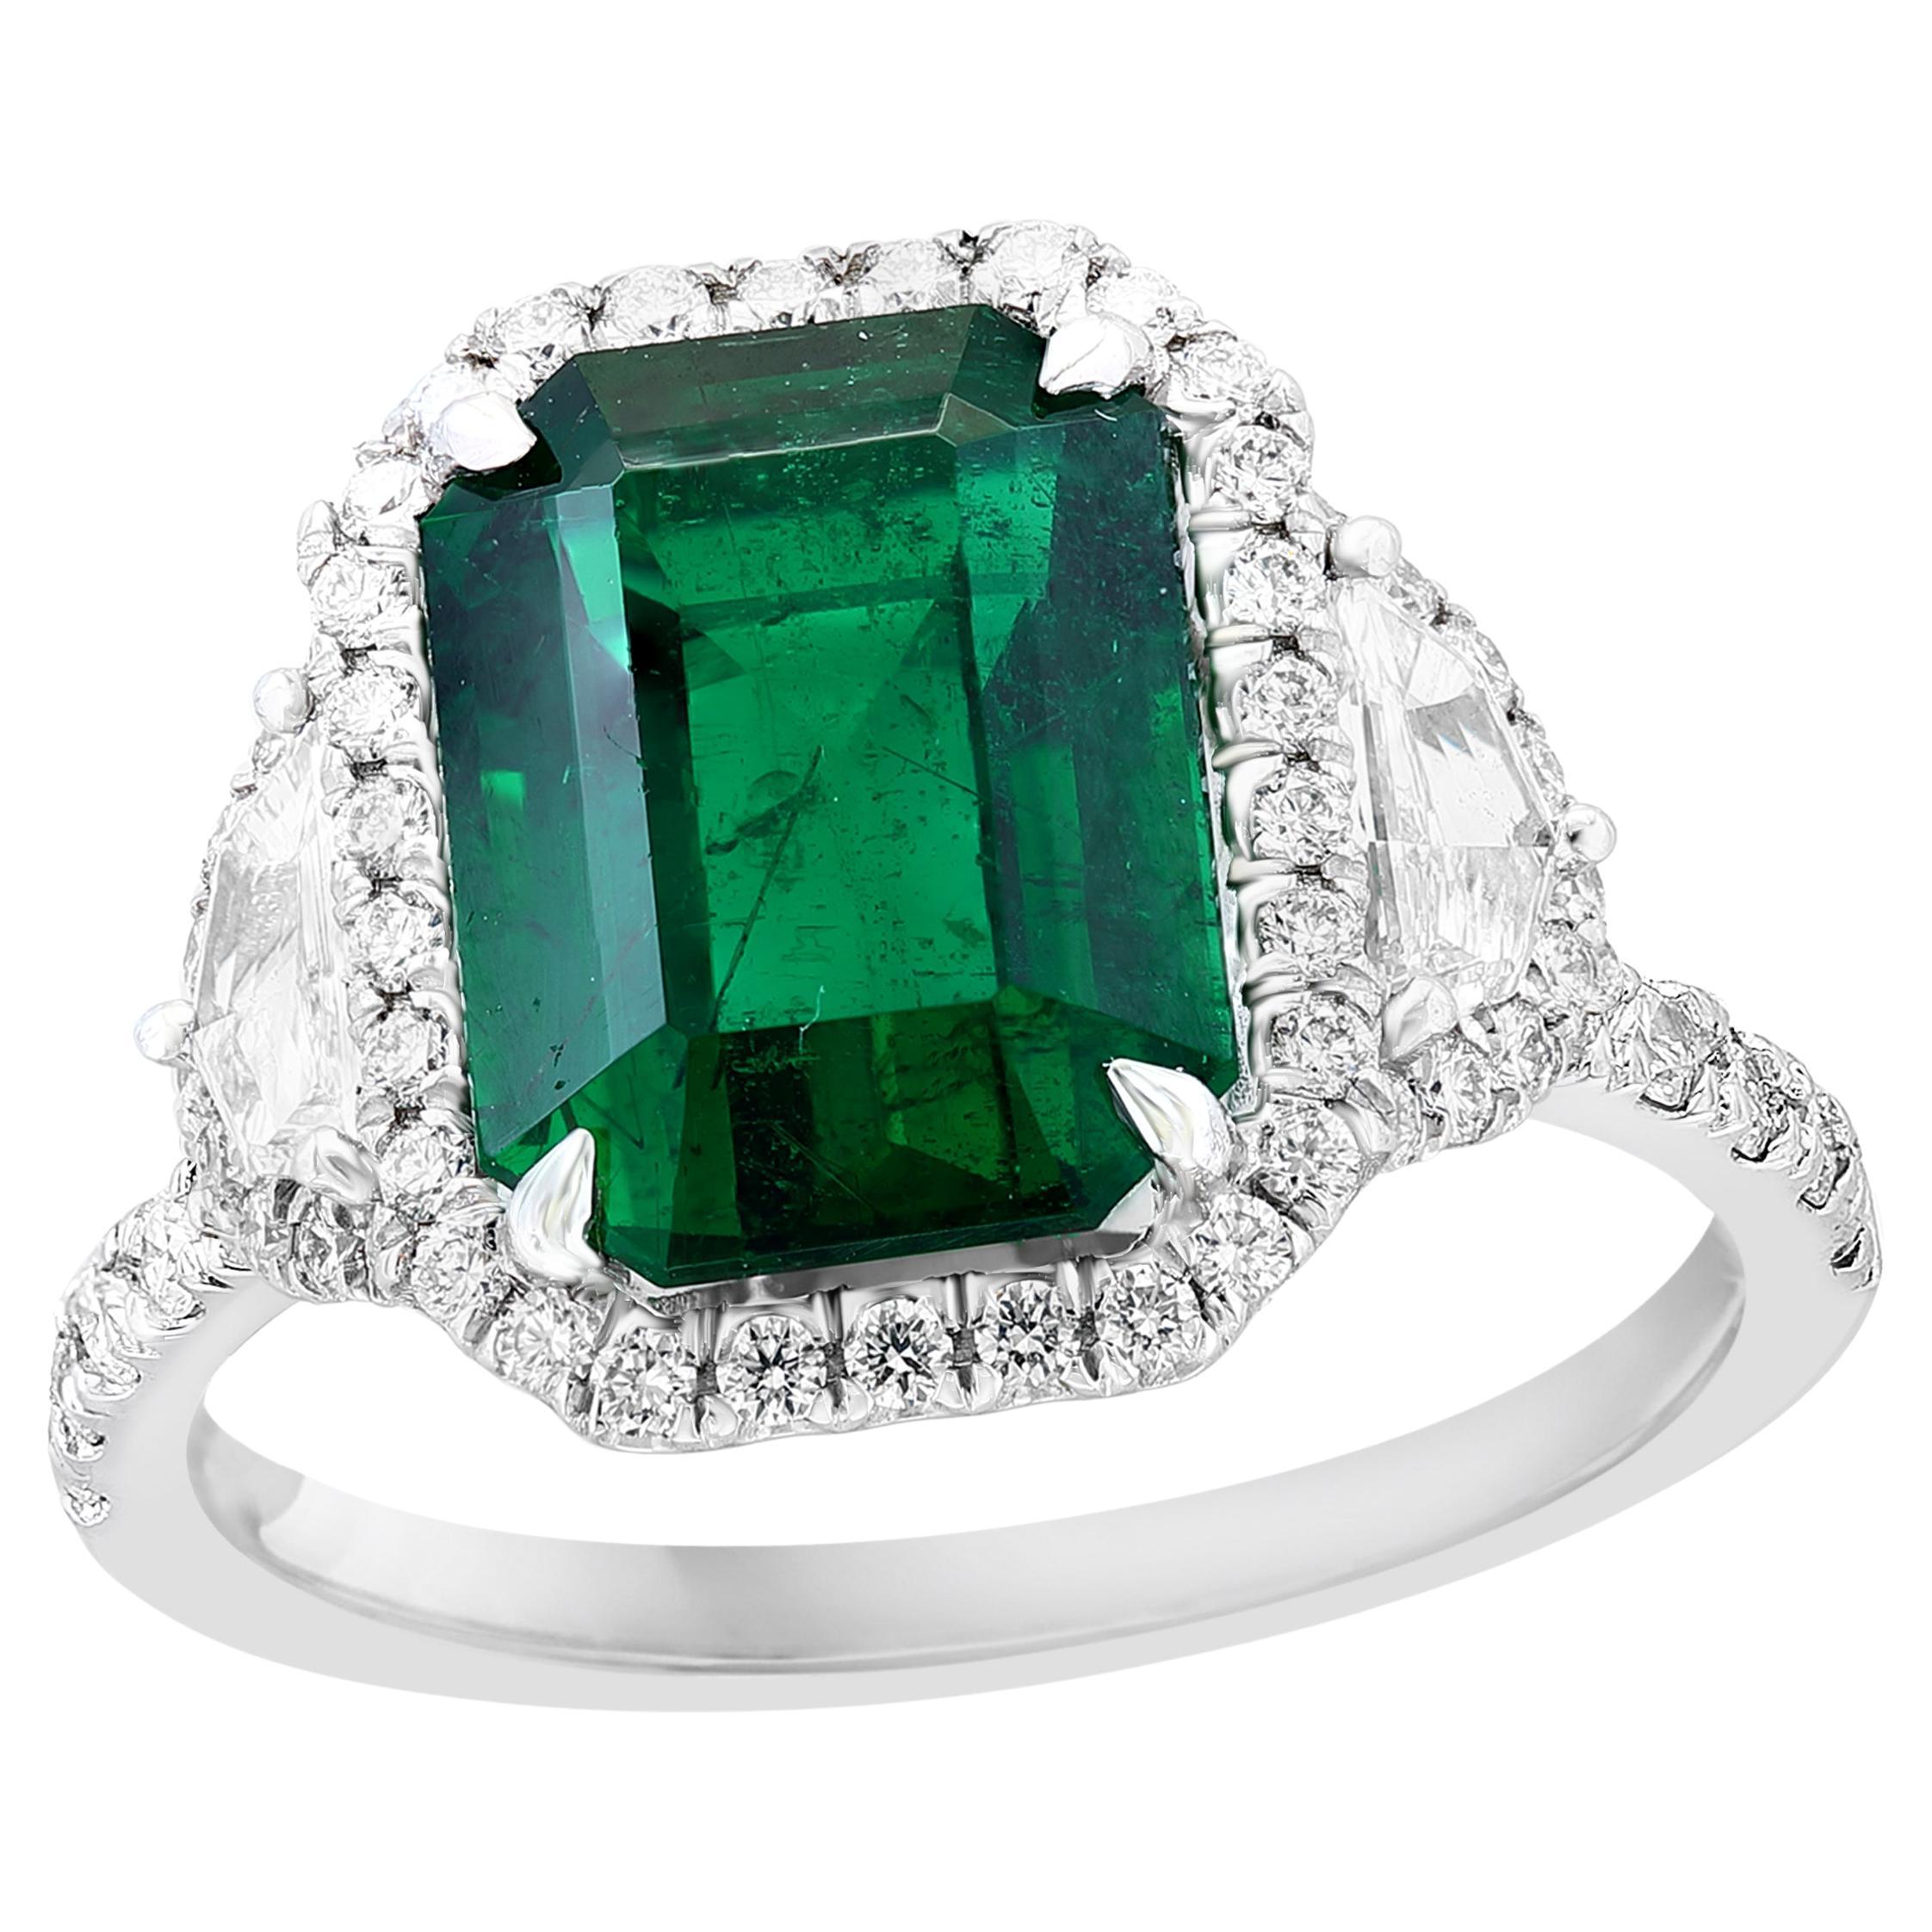 GIA Certified 4.07 Carat Emerald Cut Emerald Diamond 3 Stone Ring in Platinum For Sale